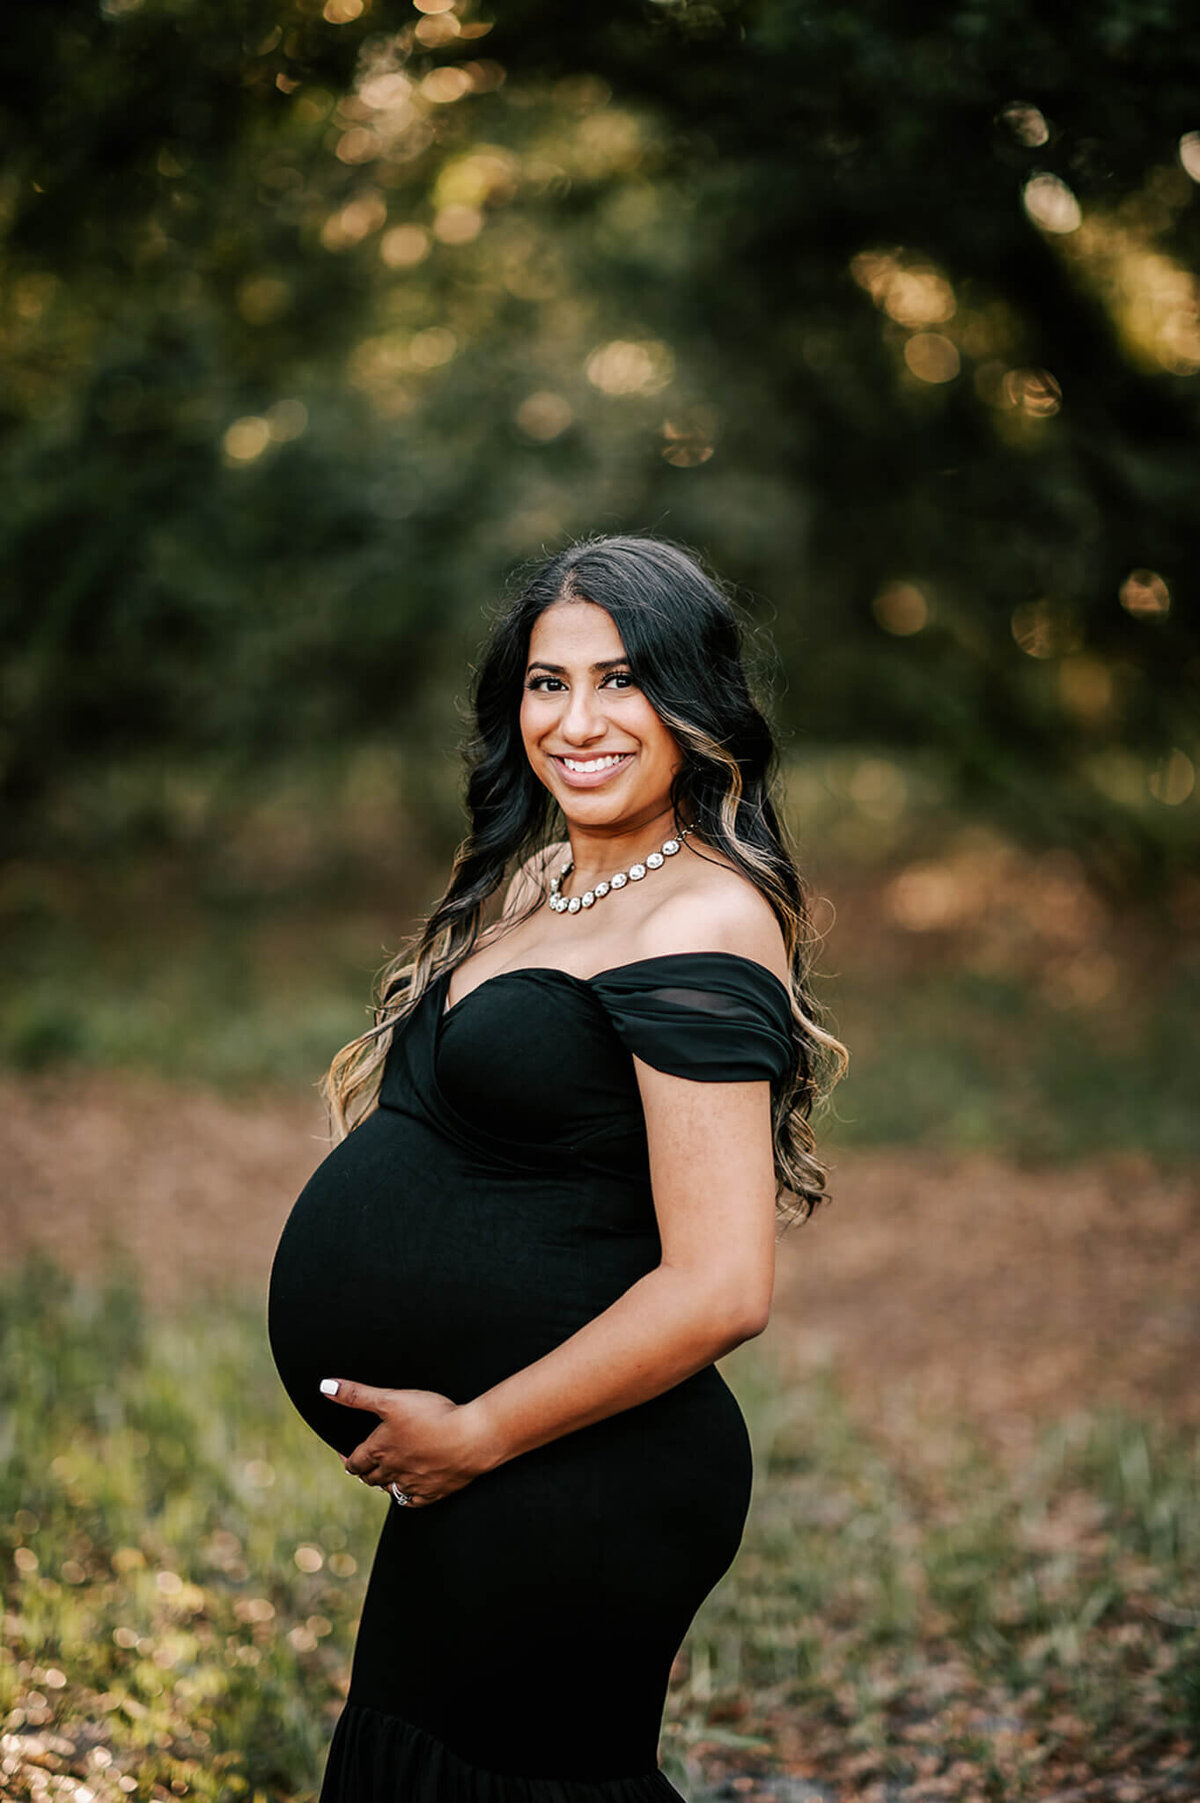 durham-maternity-photographer-haleigh-nicole-photography-585